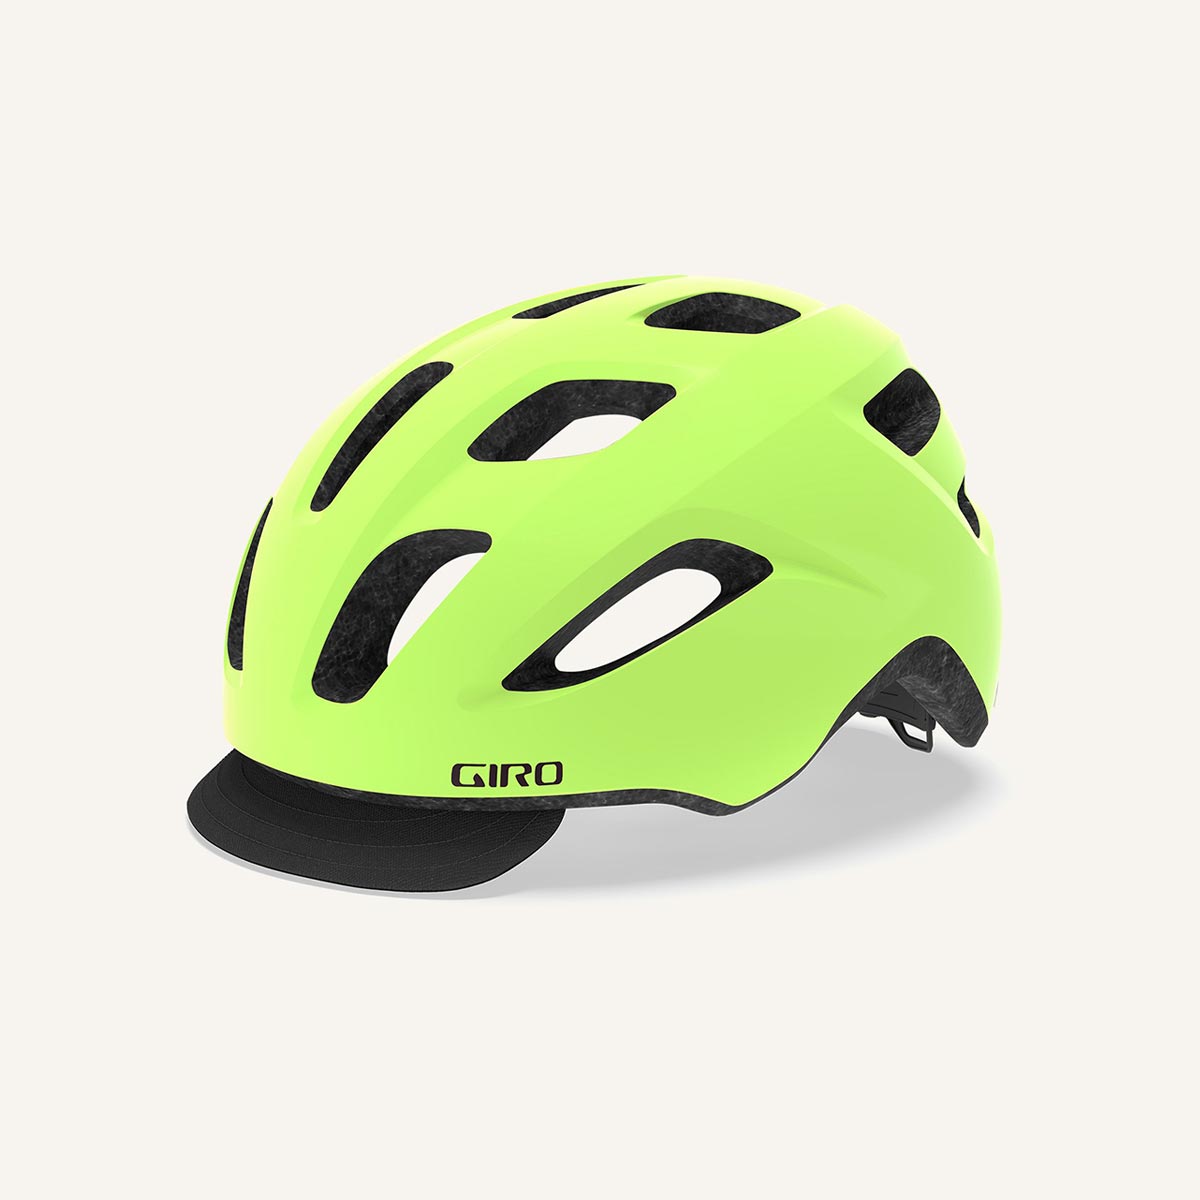 highlight-yellow-giro-cormick-helmet-for-electric-bikes